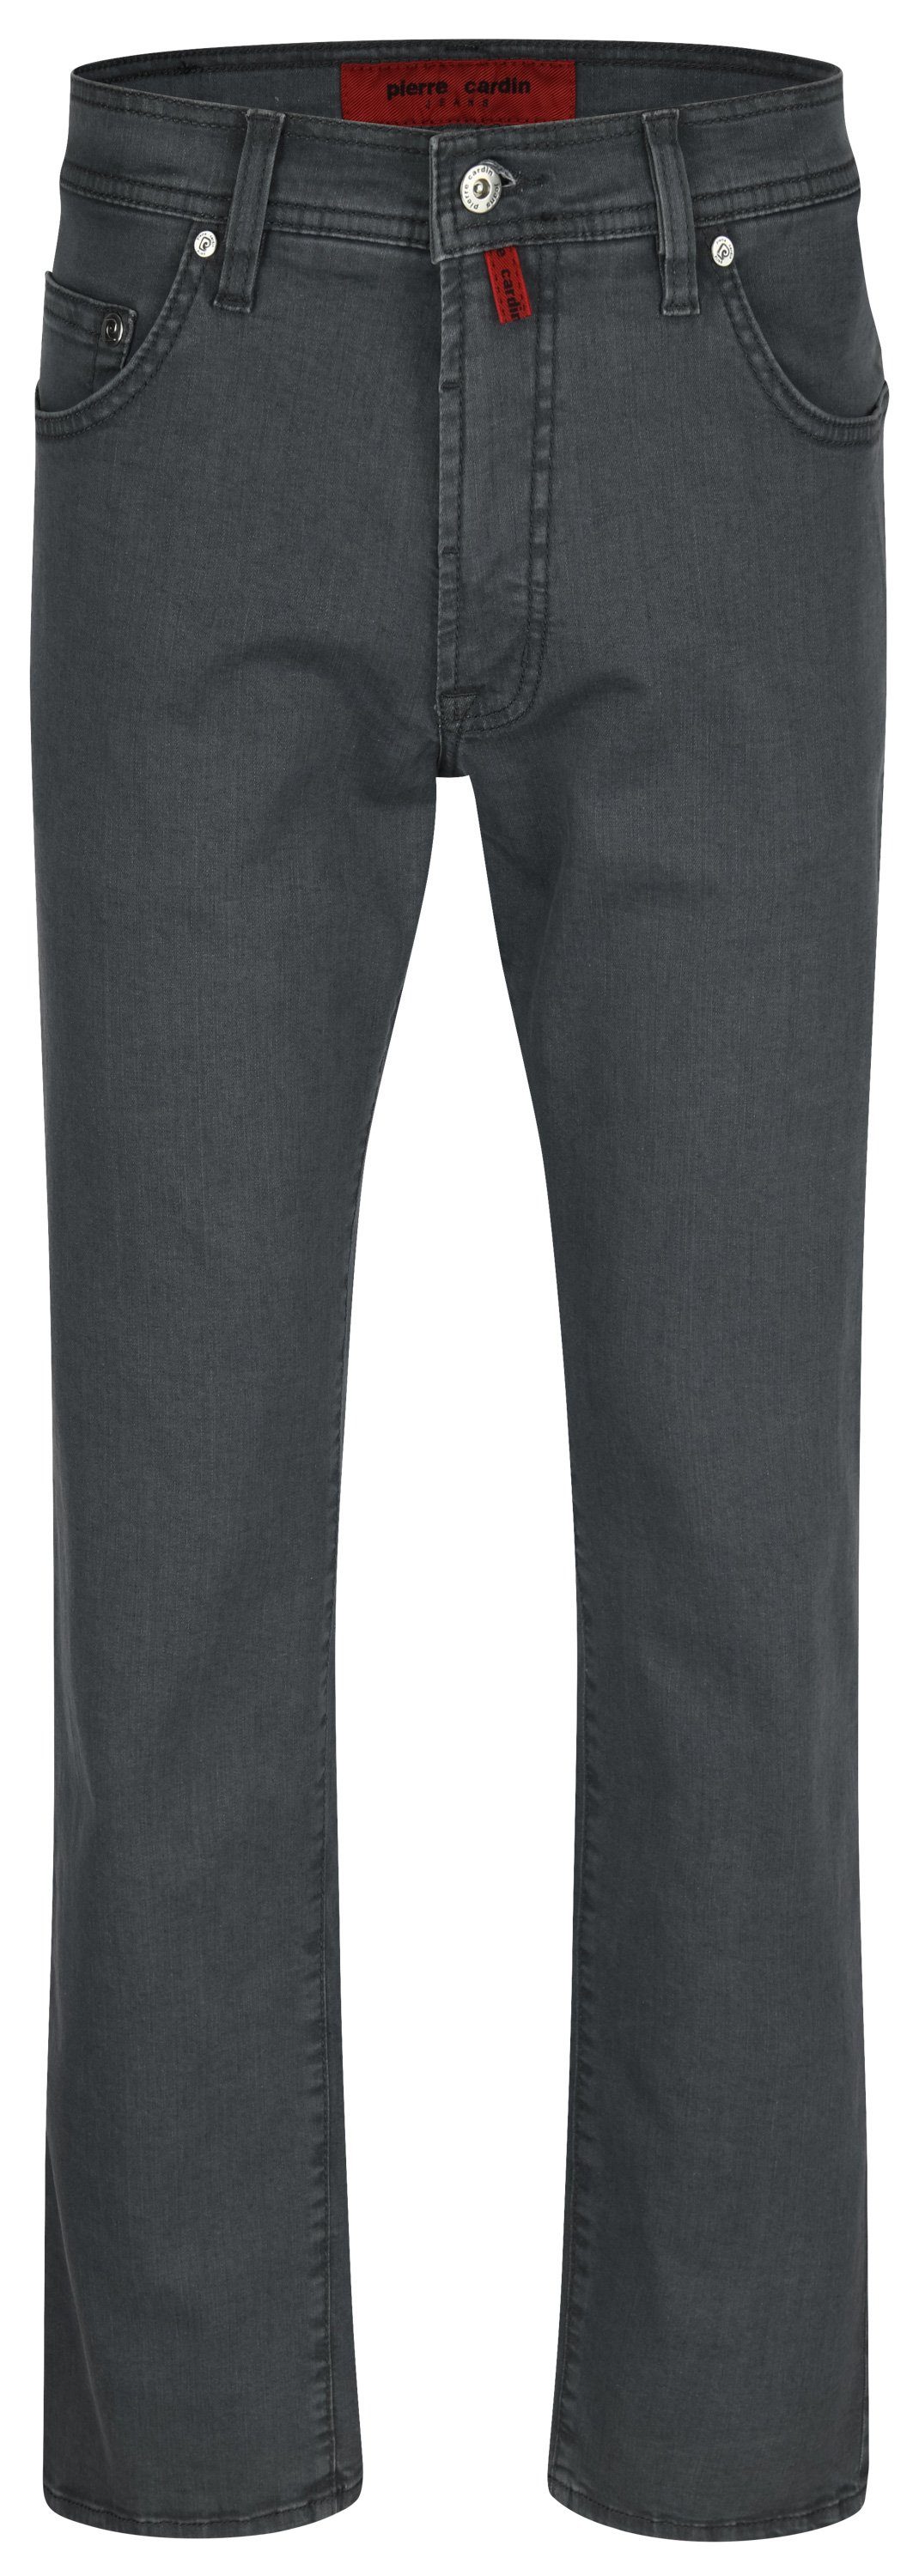 Pierre Cardin 5-Pocket-Jeans PIERRE CARDIN DEAUVILLE graphite grey 3196 866.02 - DENIM EDITION